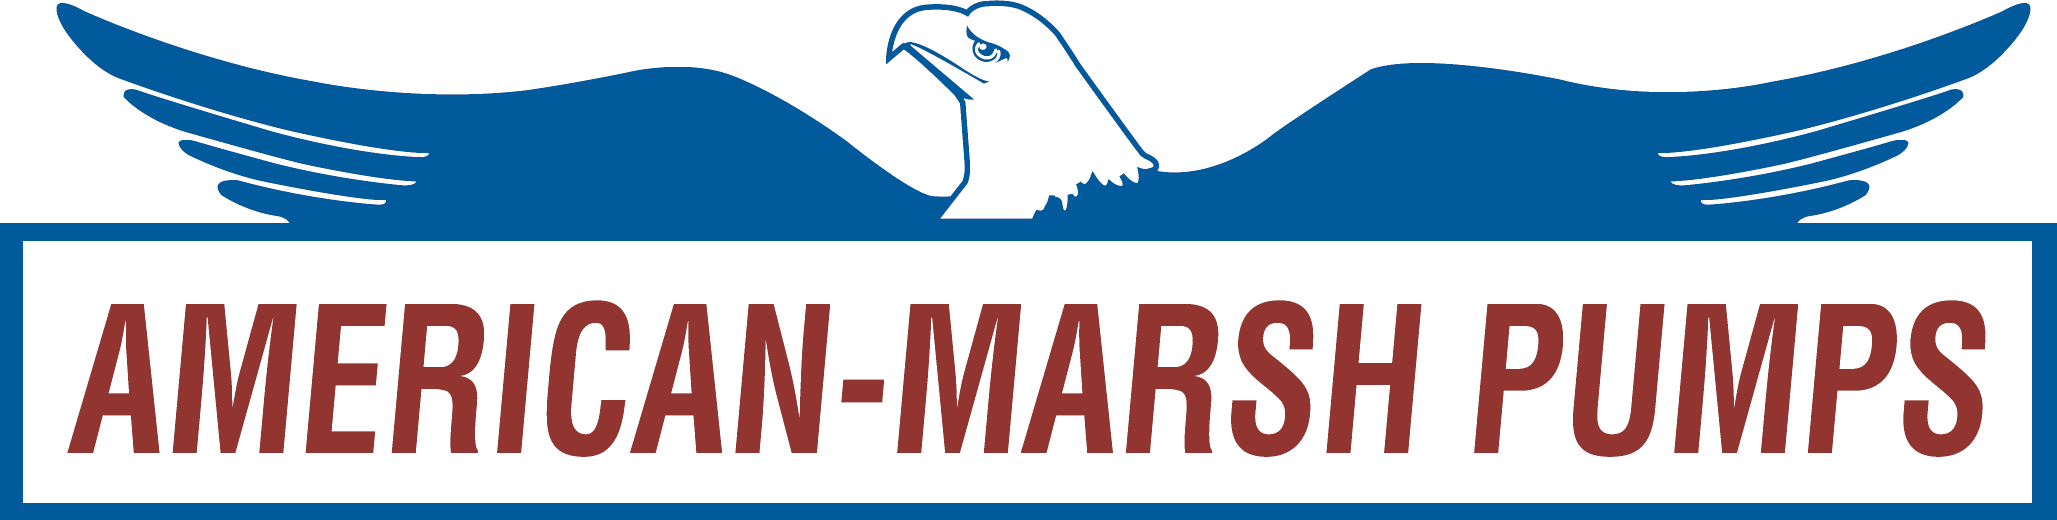 American-Marsh Pumps Logo photo - 1